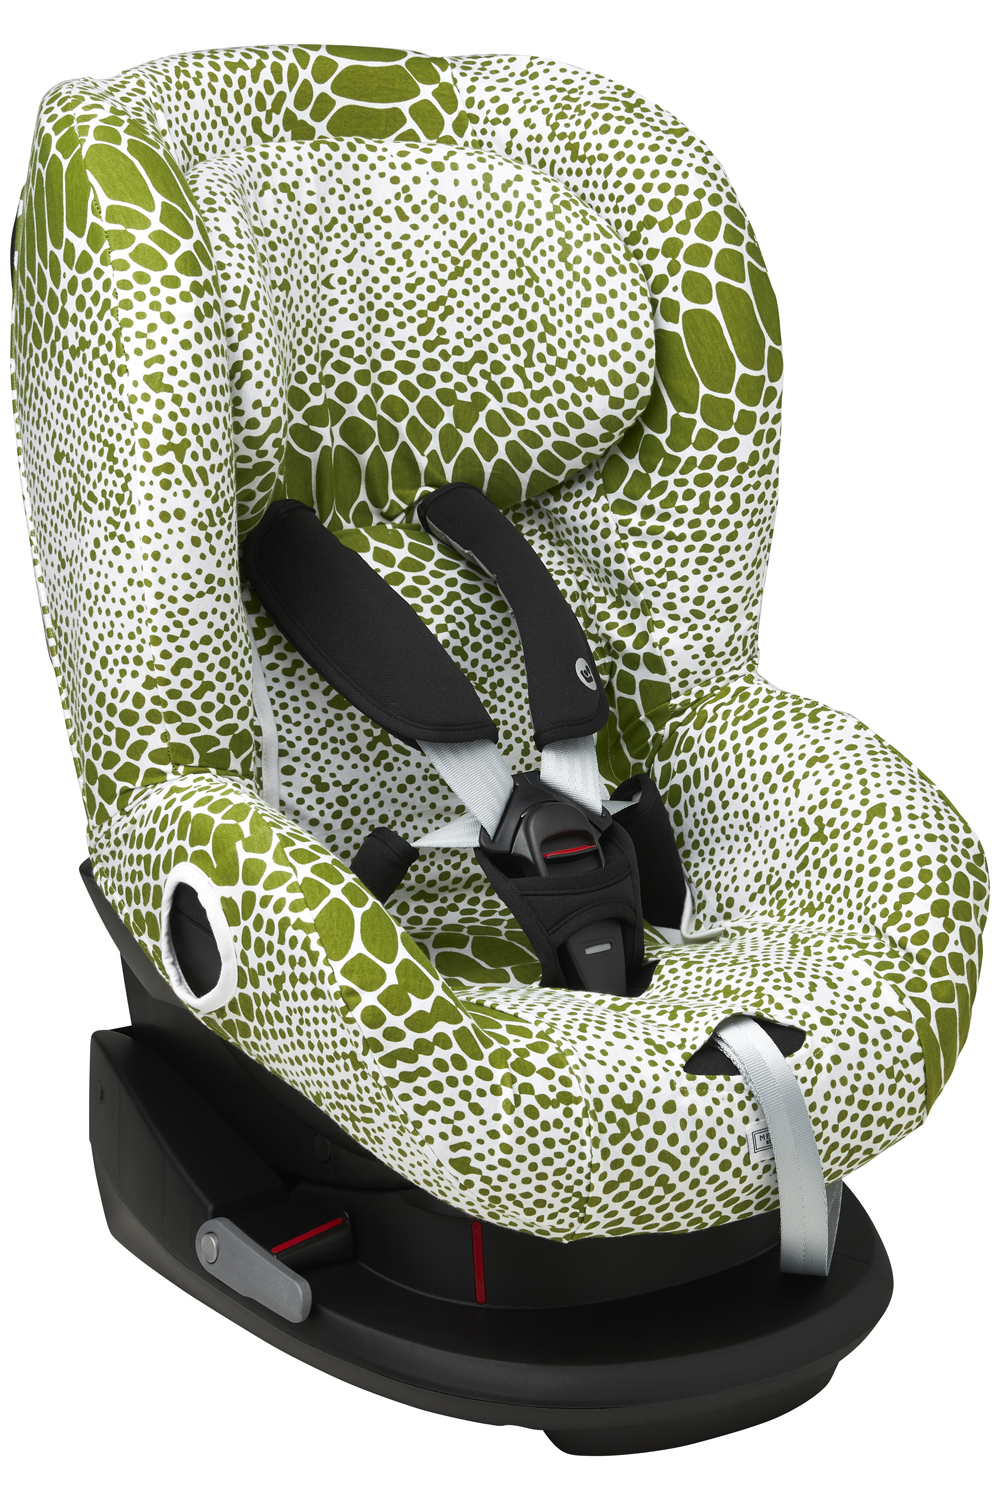 Kindersitzbezug Snake - avocado - Gruppe 1+ inkl. Kopfst√ºtze